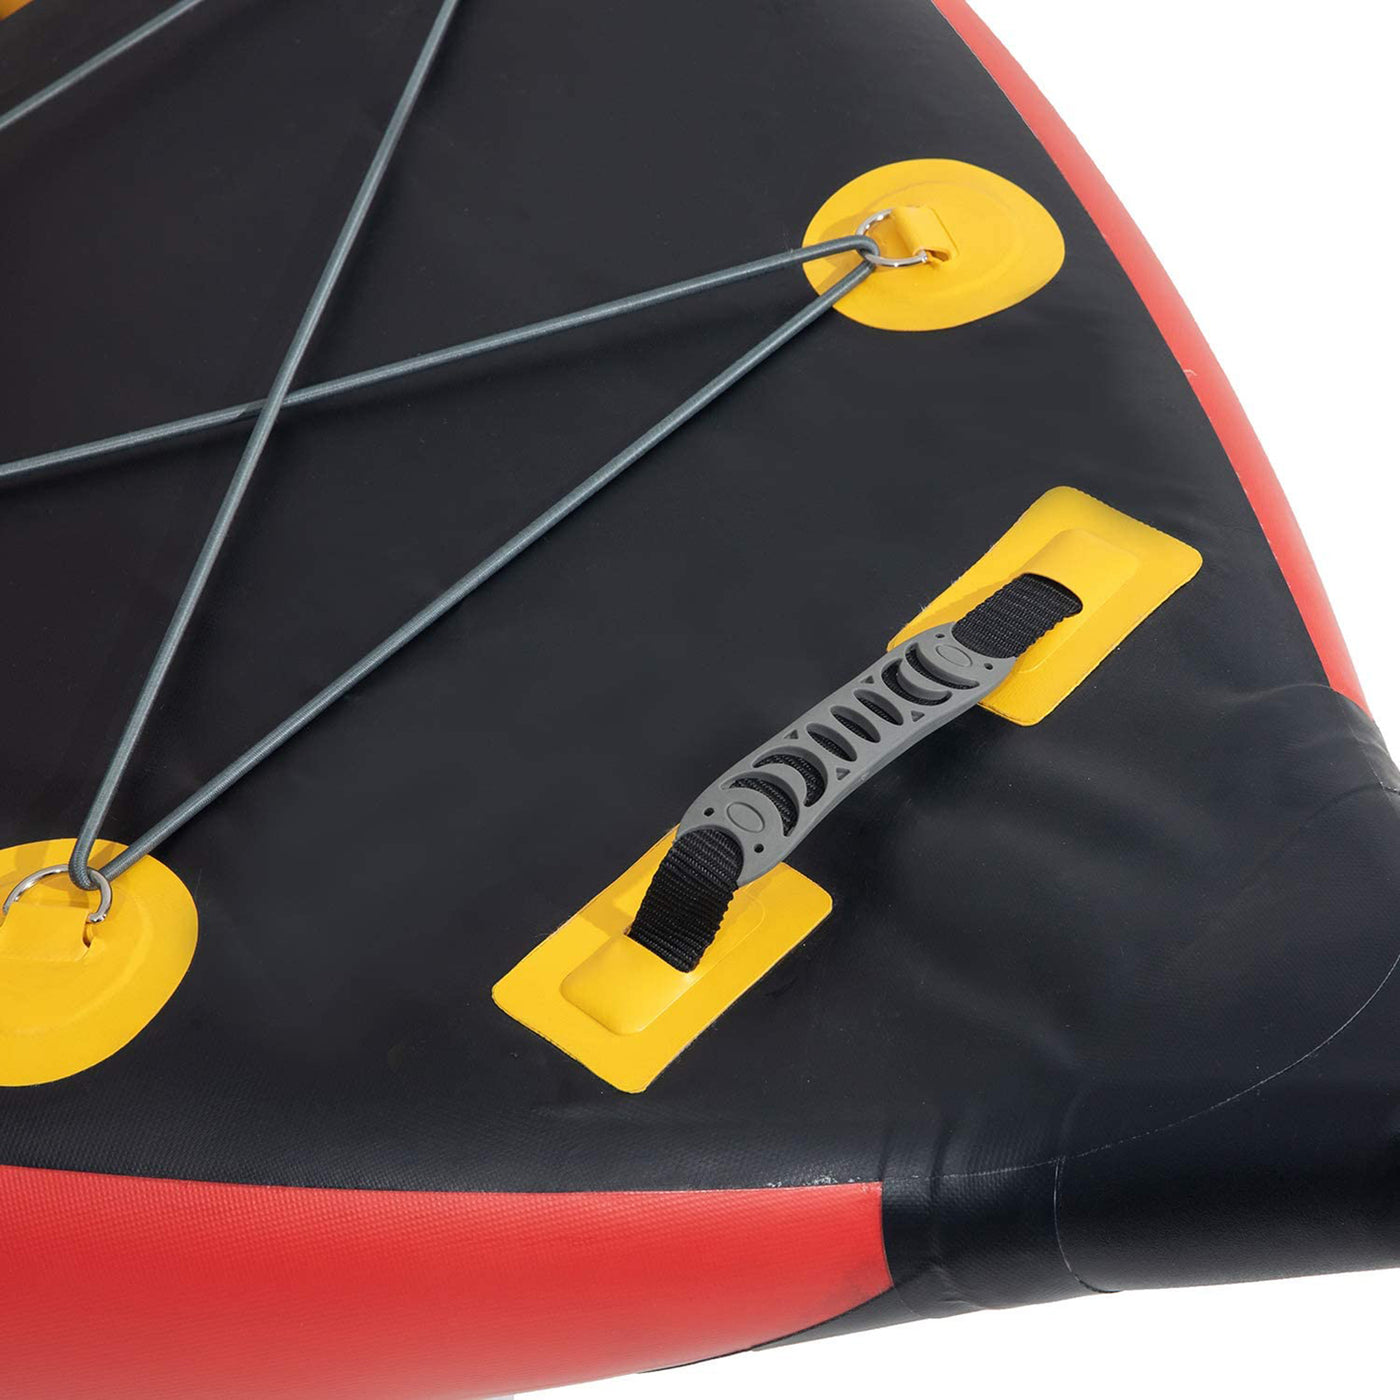 Freein 12'6 Explorer Kayak gonfiabile